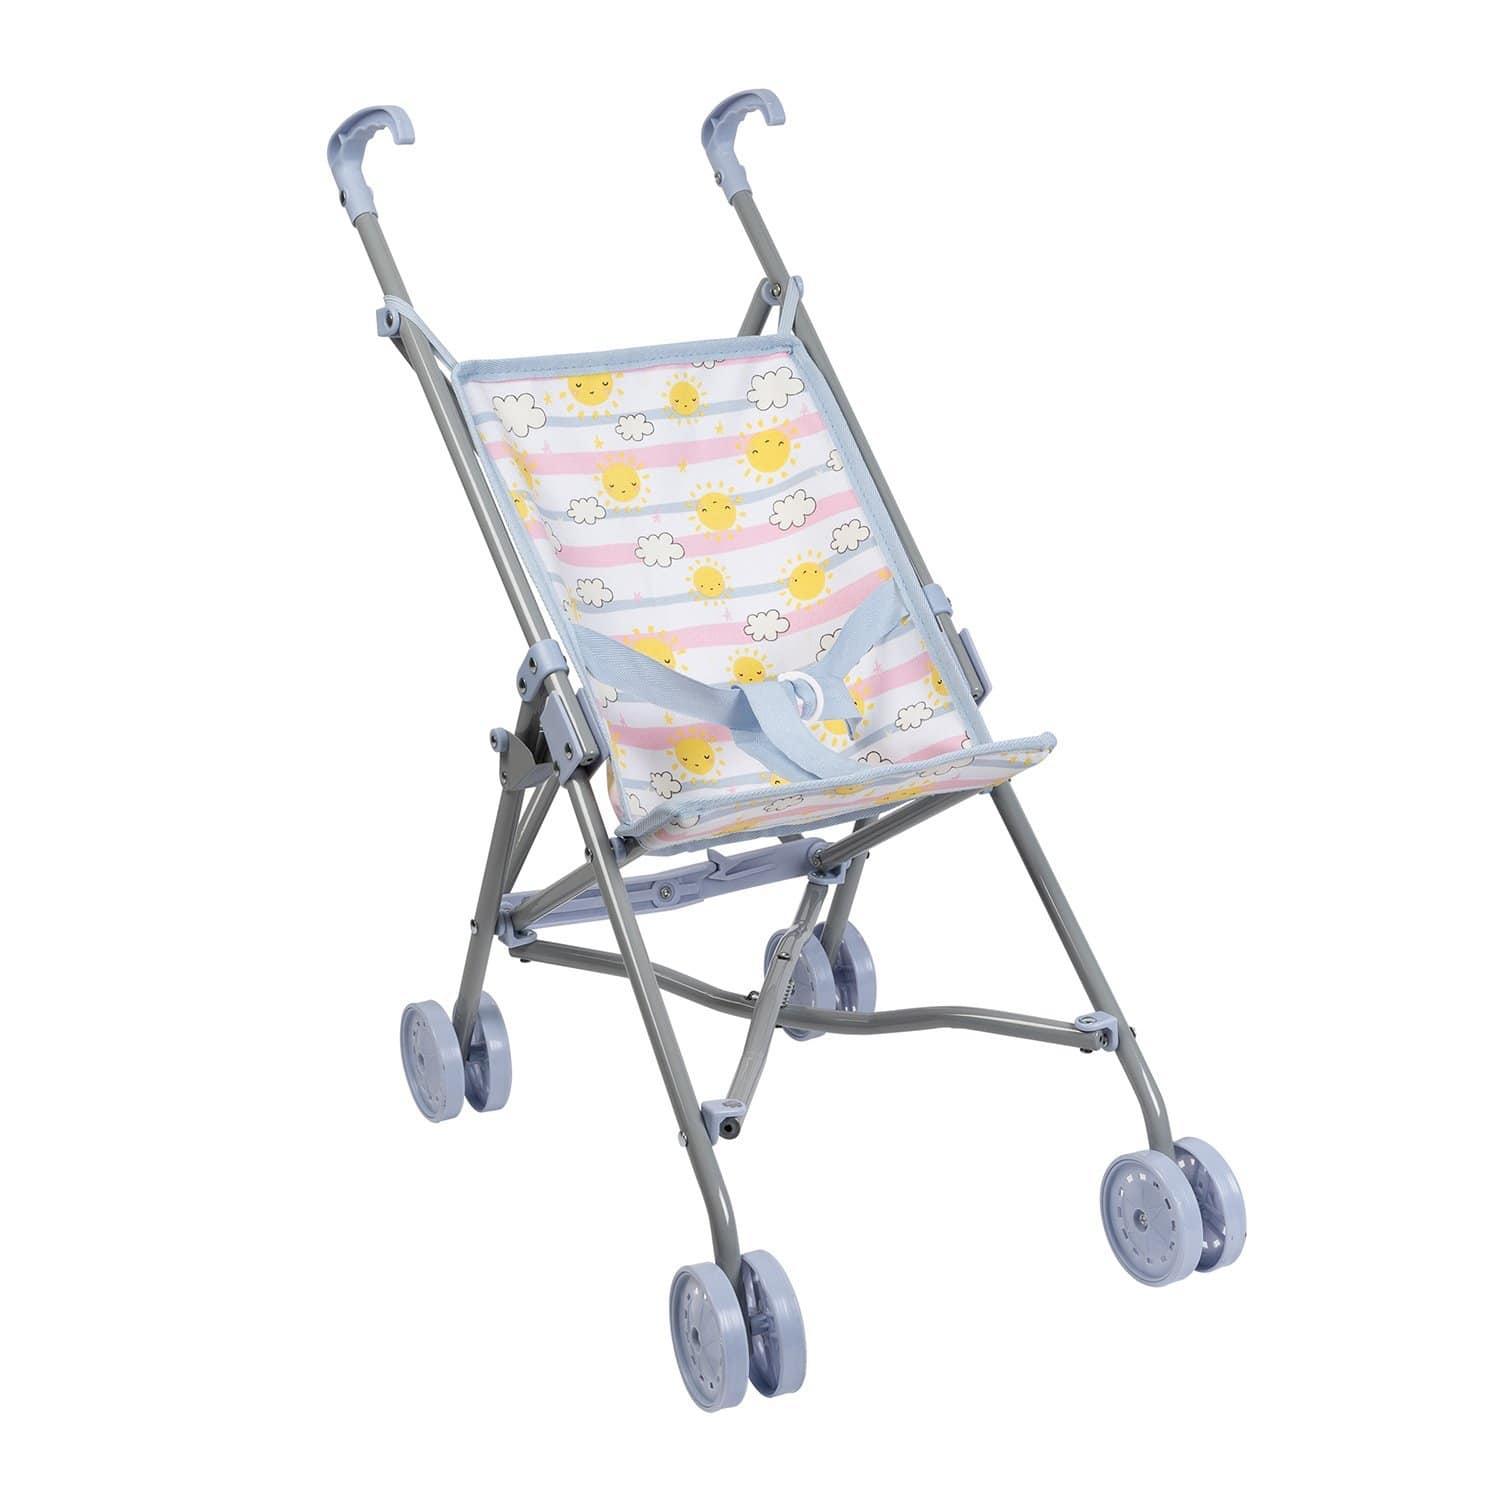 Adora Interactive Doll Accessory Sunny Days Small Umbrella Stroller